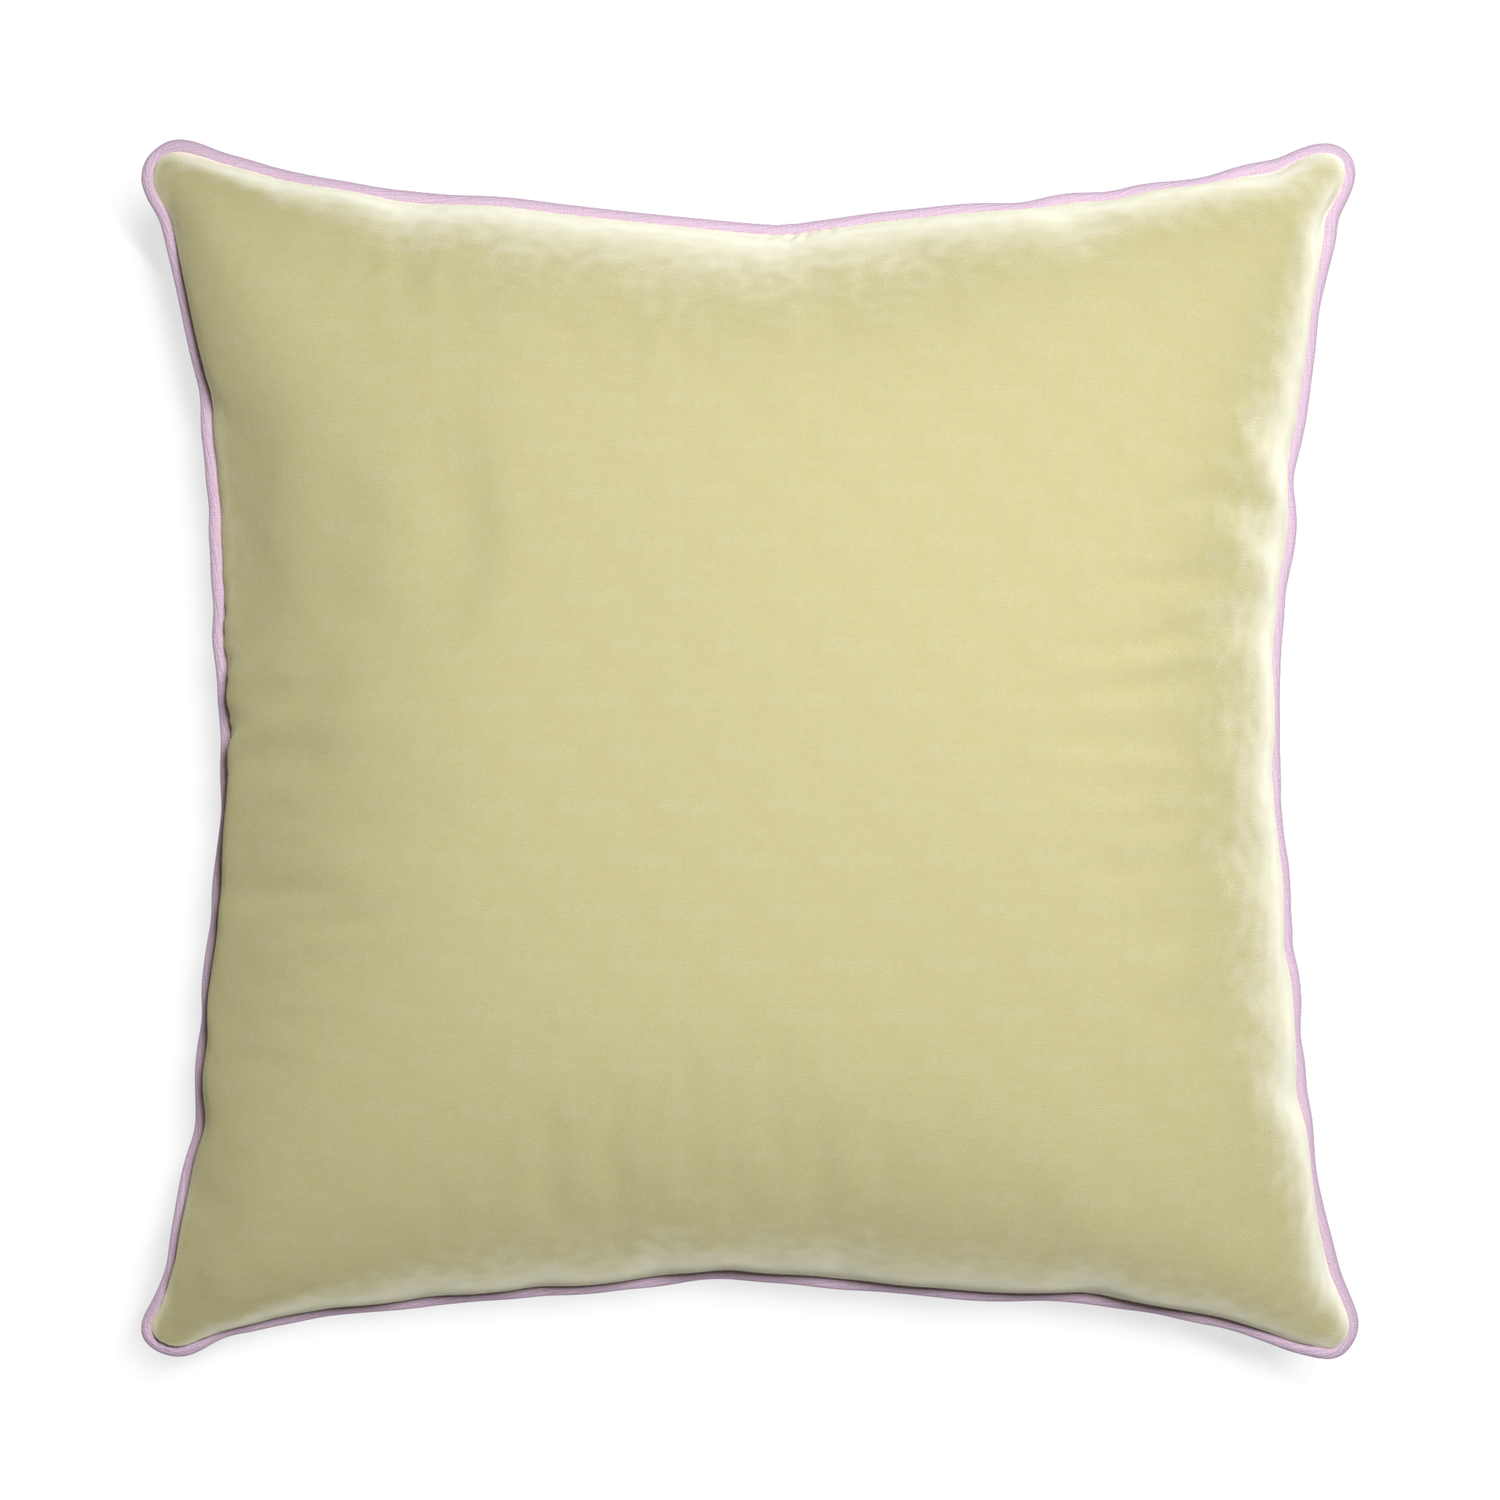 Euro-sham pear velvet custom pillow with l piping on white background